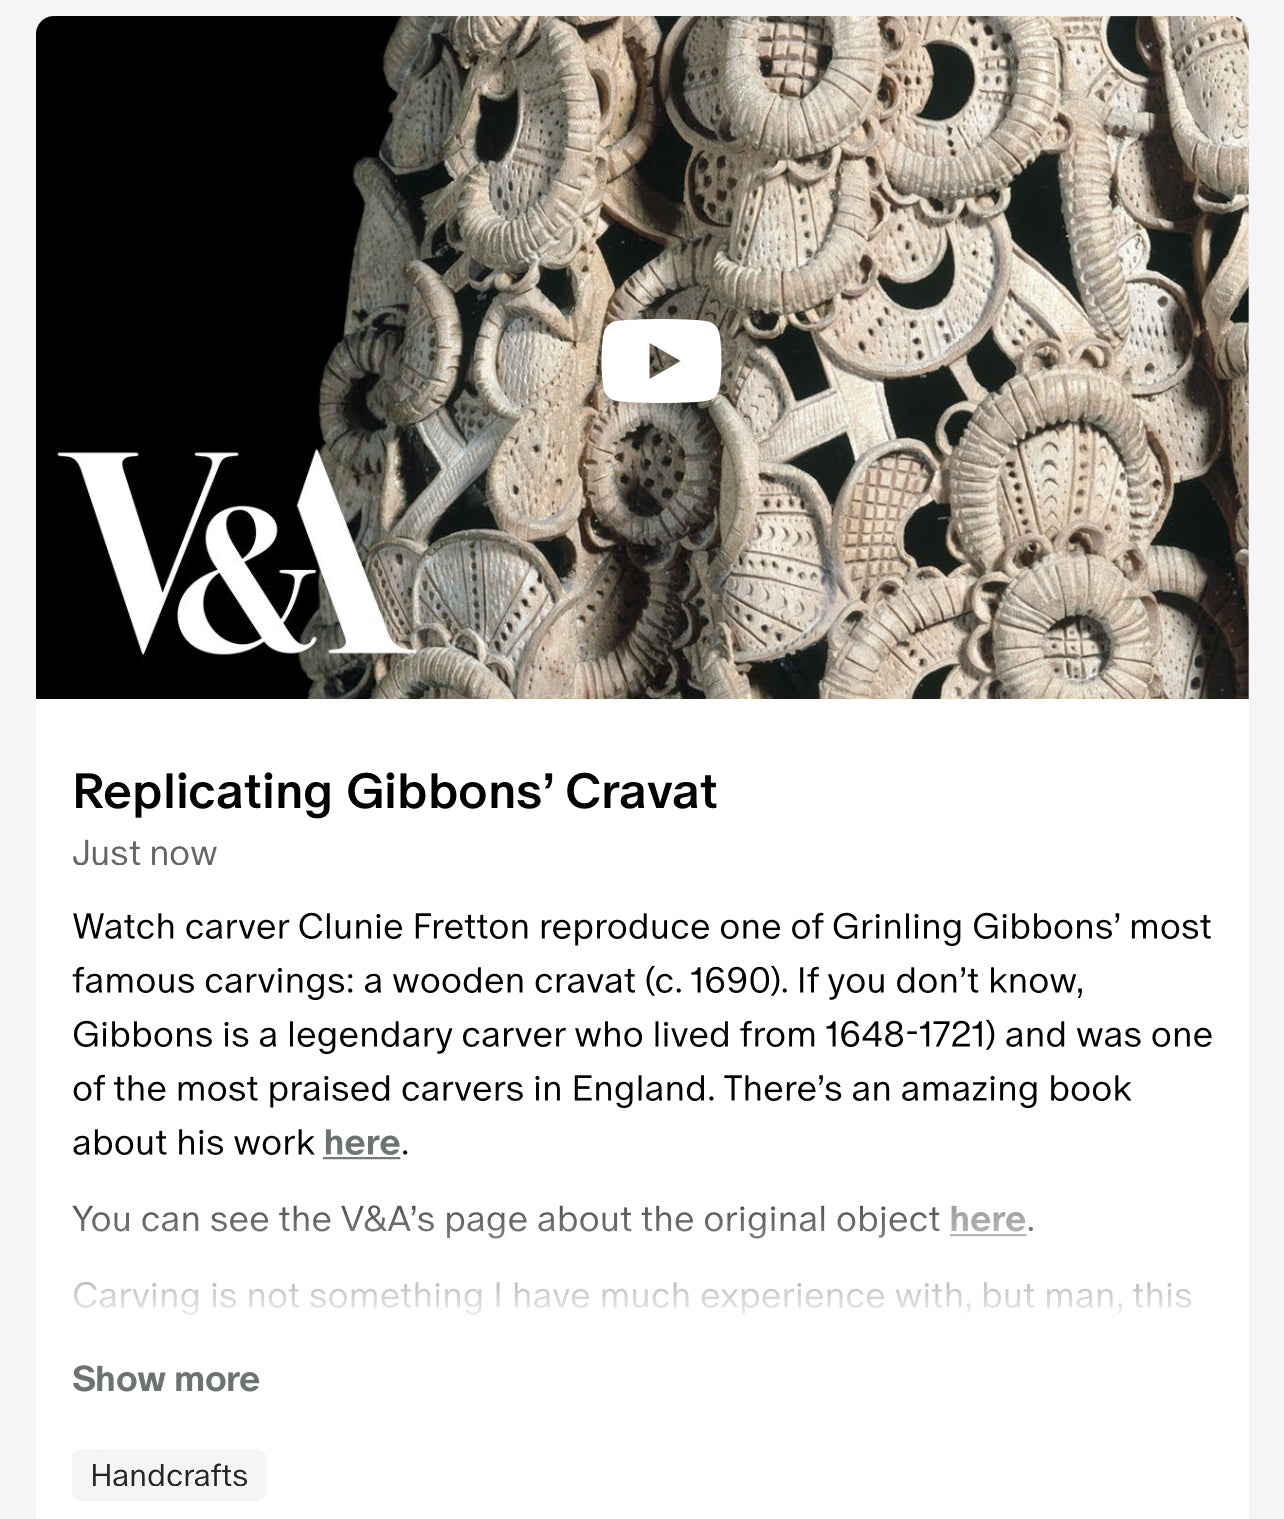 Replicating Gibbons’ Cravat